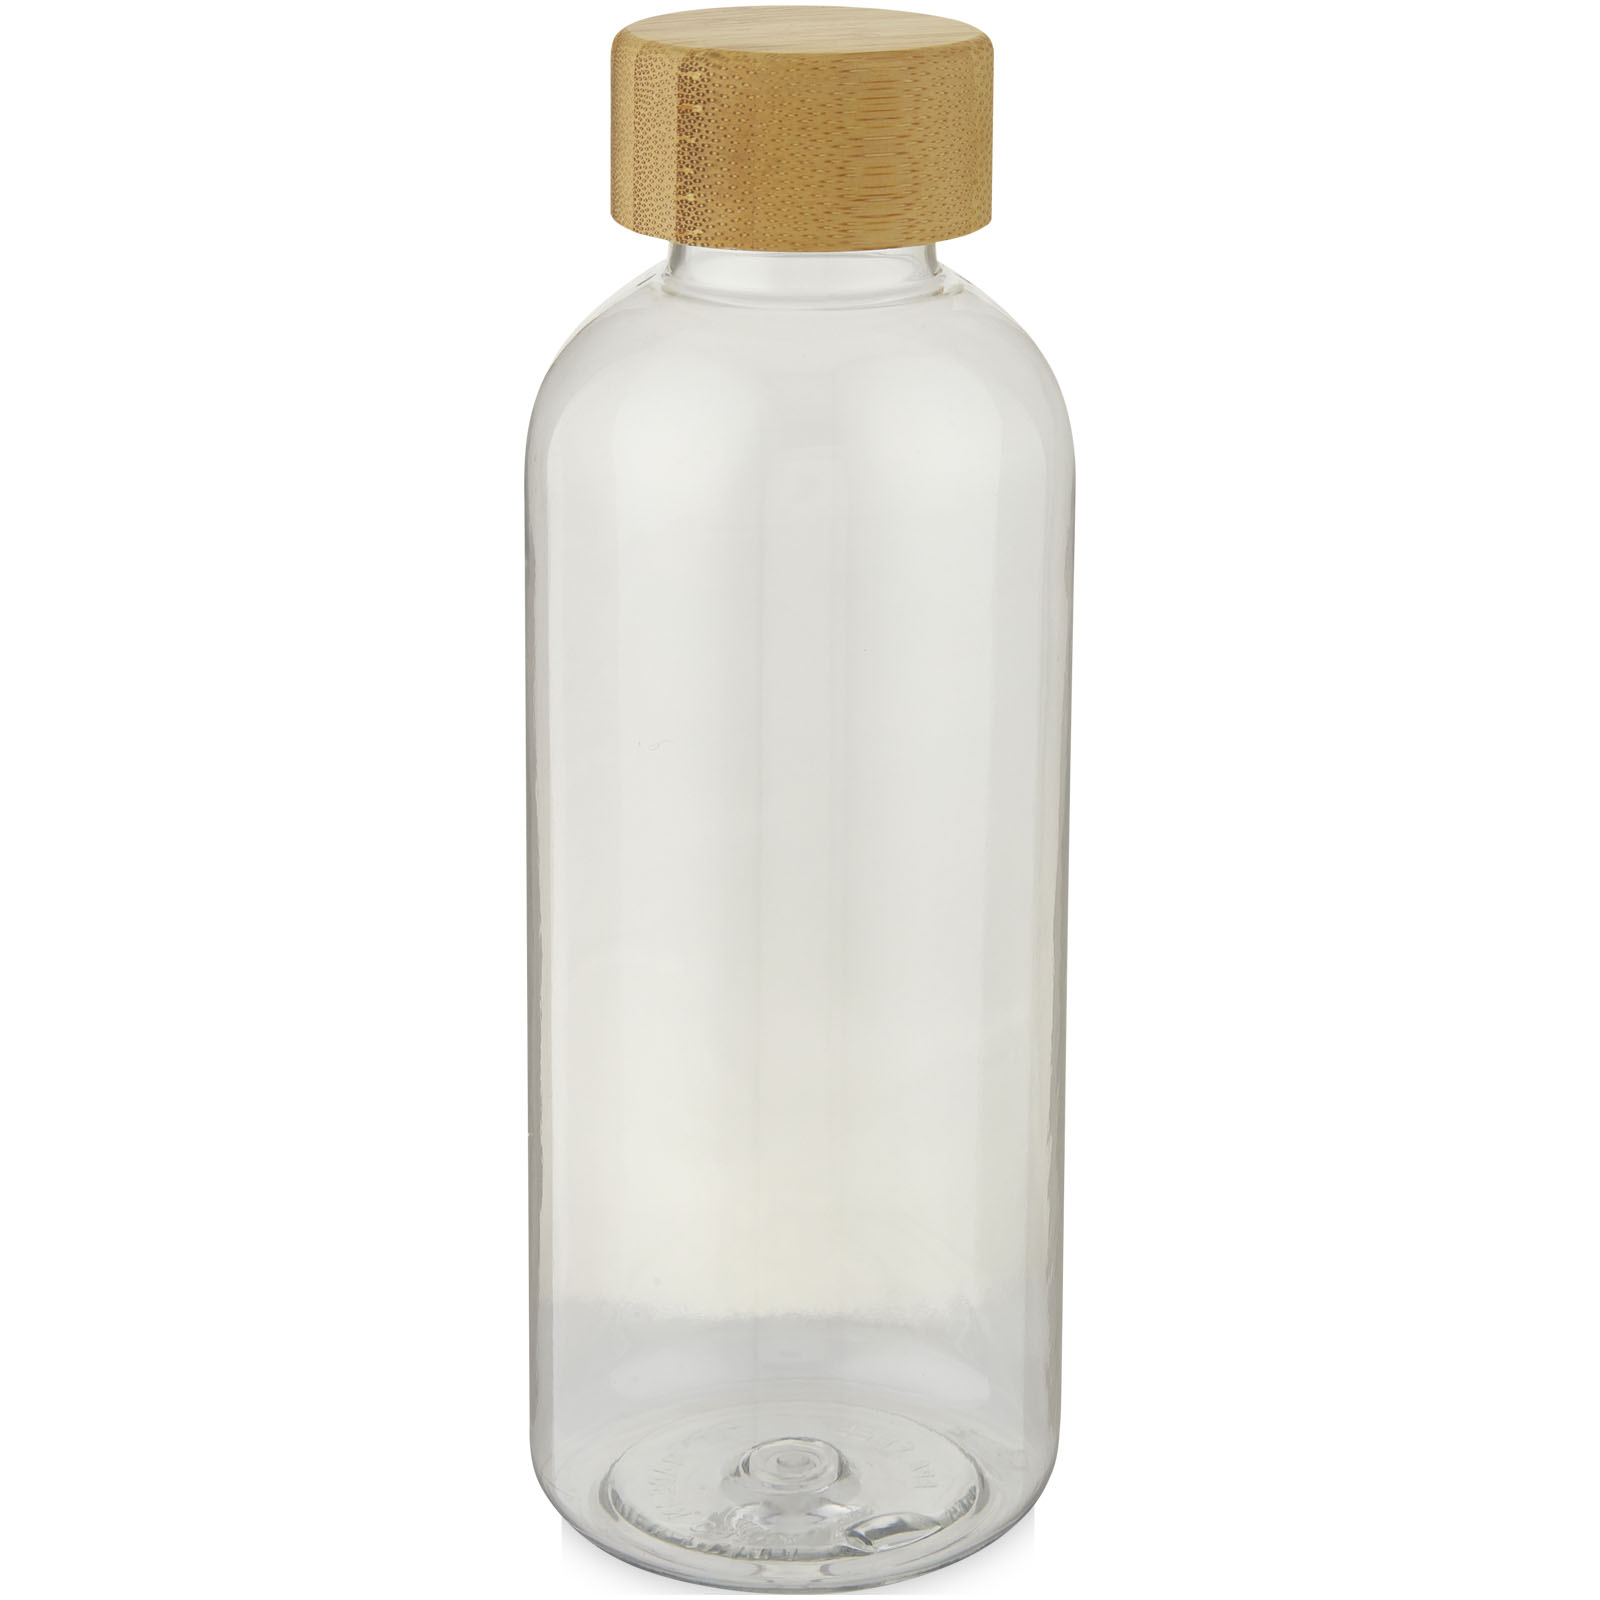 Water bottles - Ziggs 650 ml recycled plastic water bottle